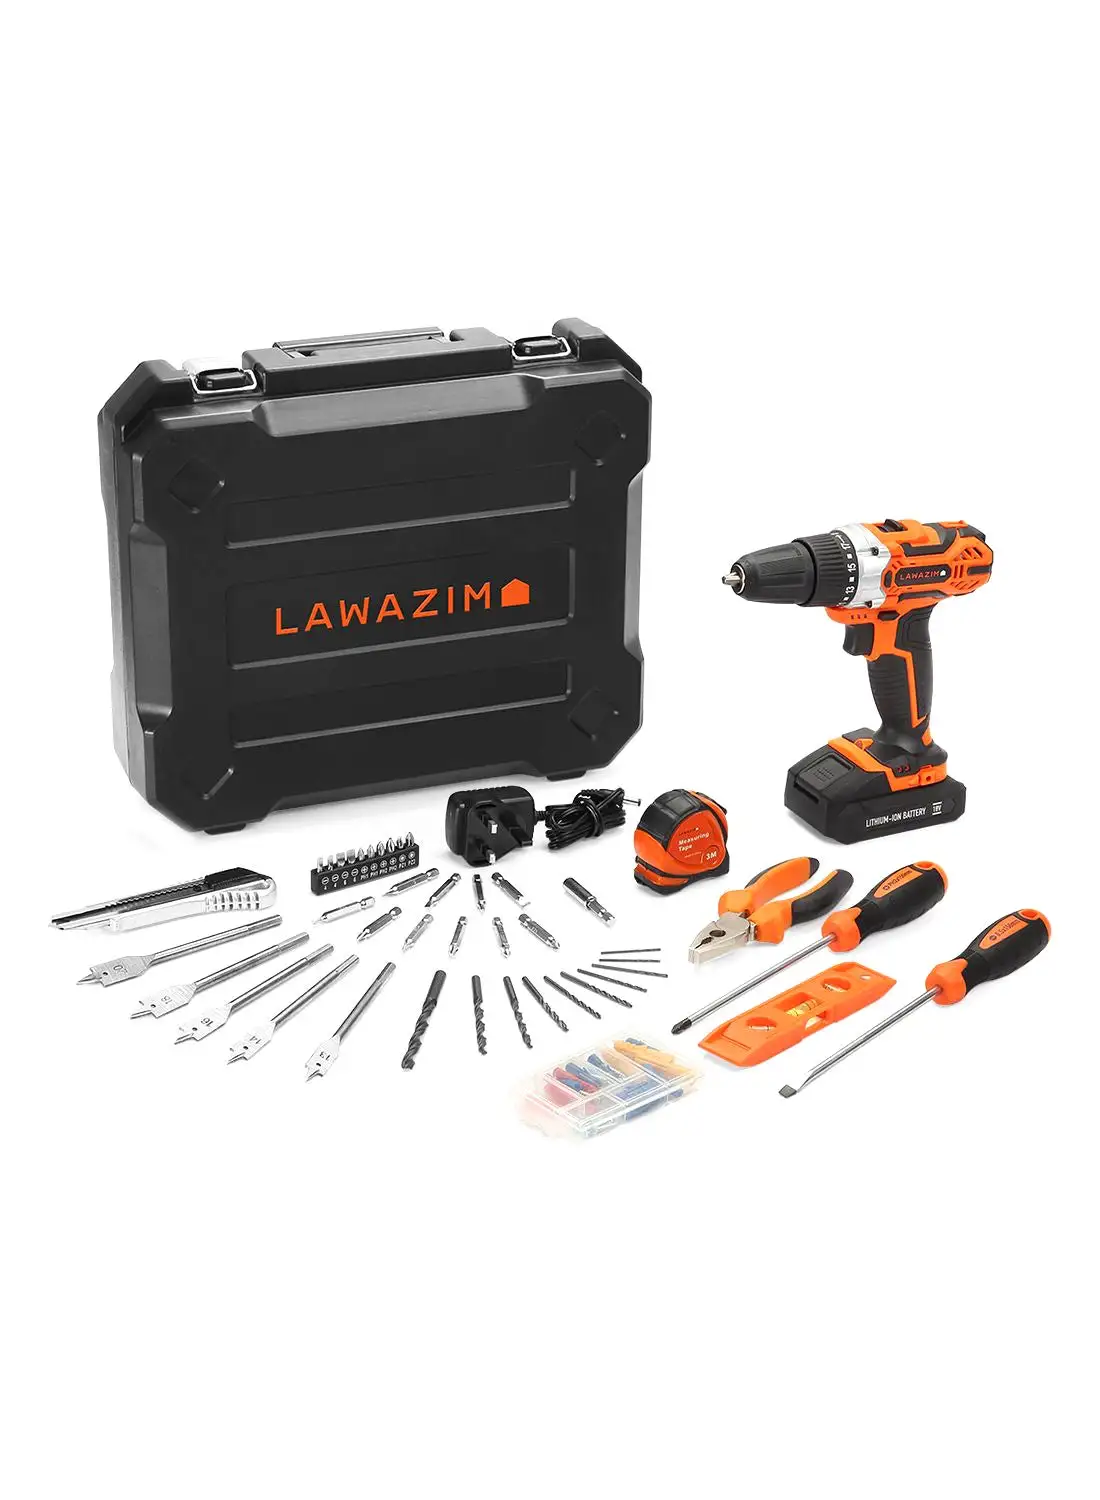 LAWAZIM Heavy Duty Cordless Drill Set Black/Orange